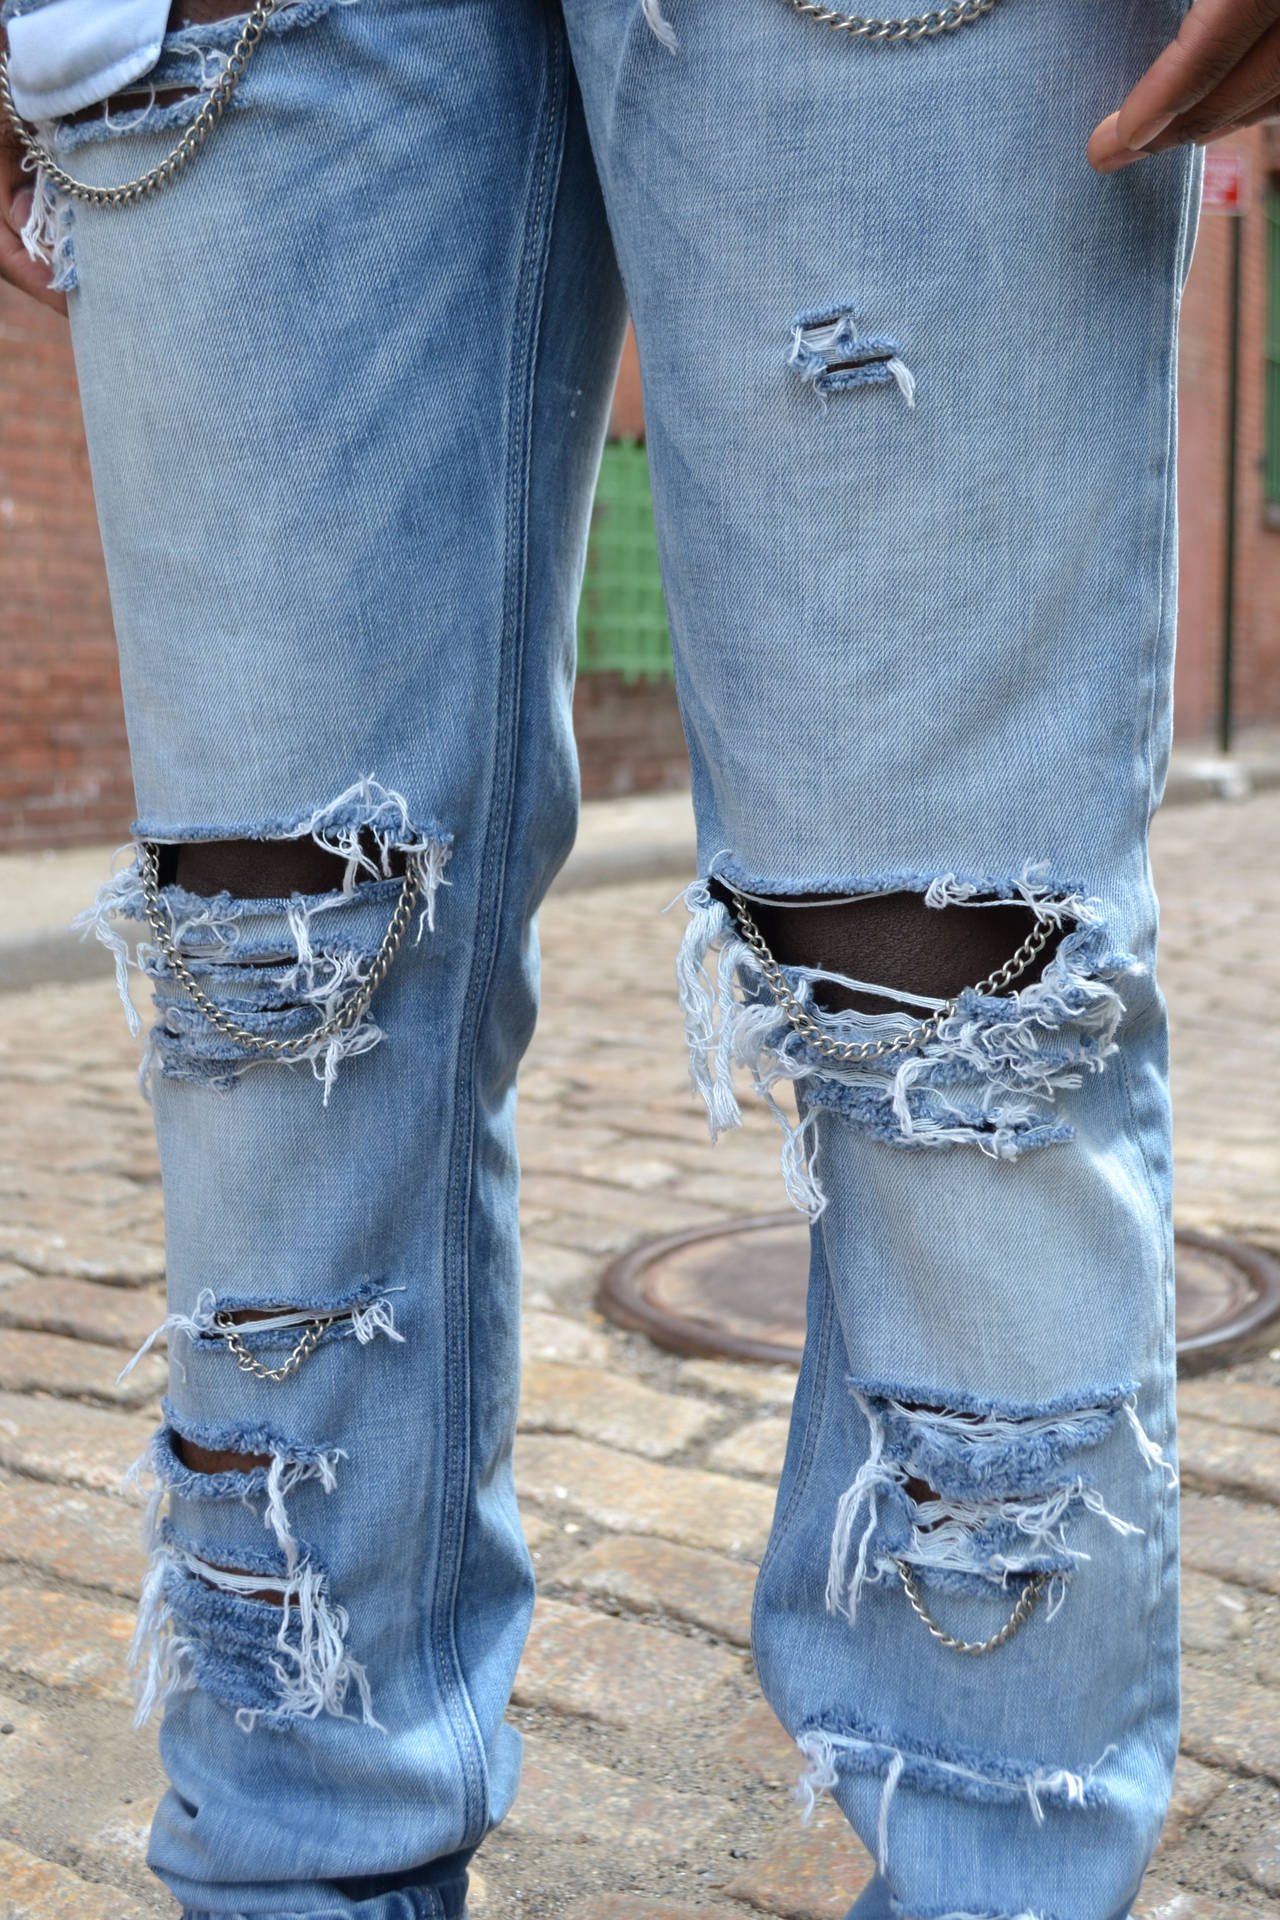 Denim Ripped Jeans For Men Background